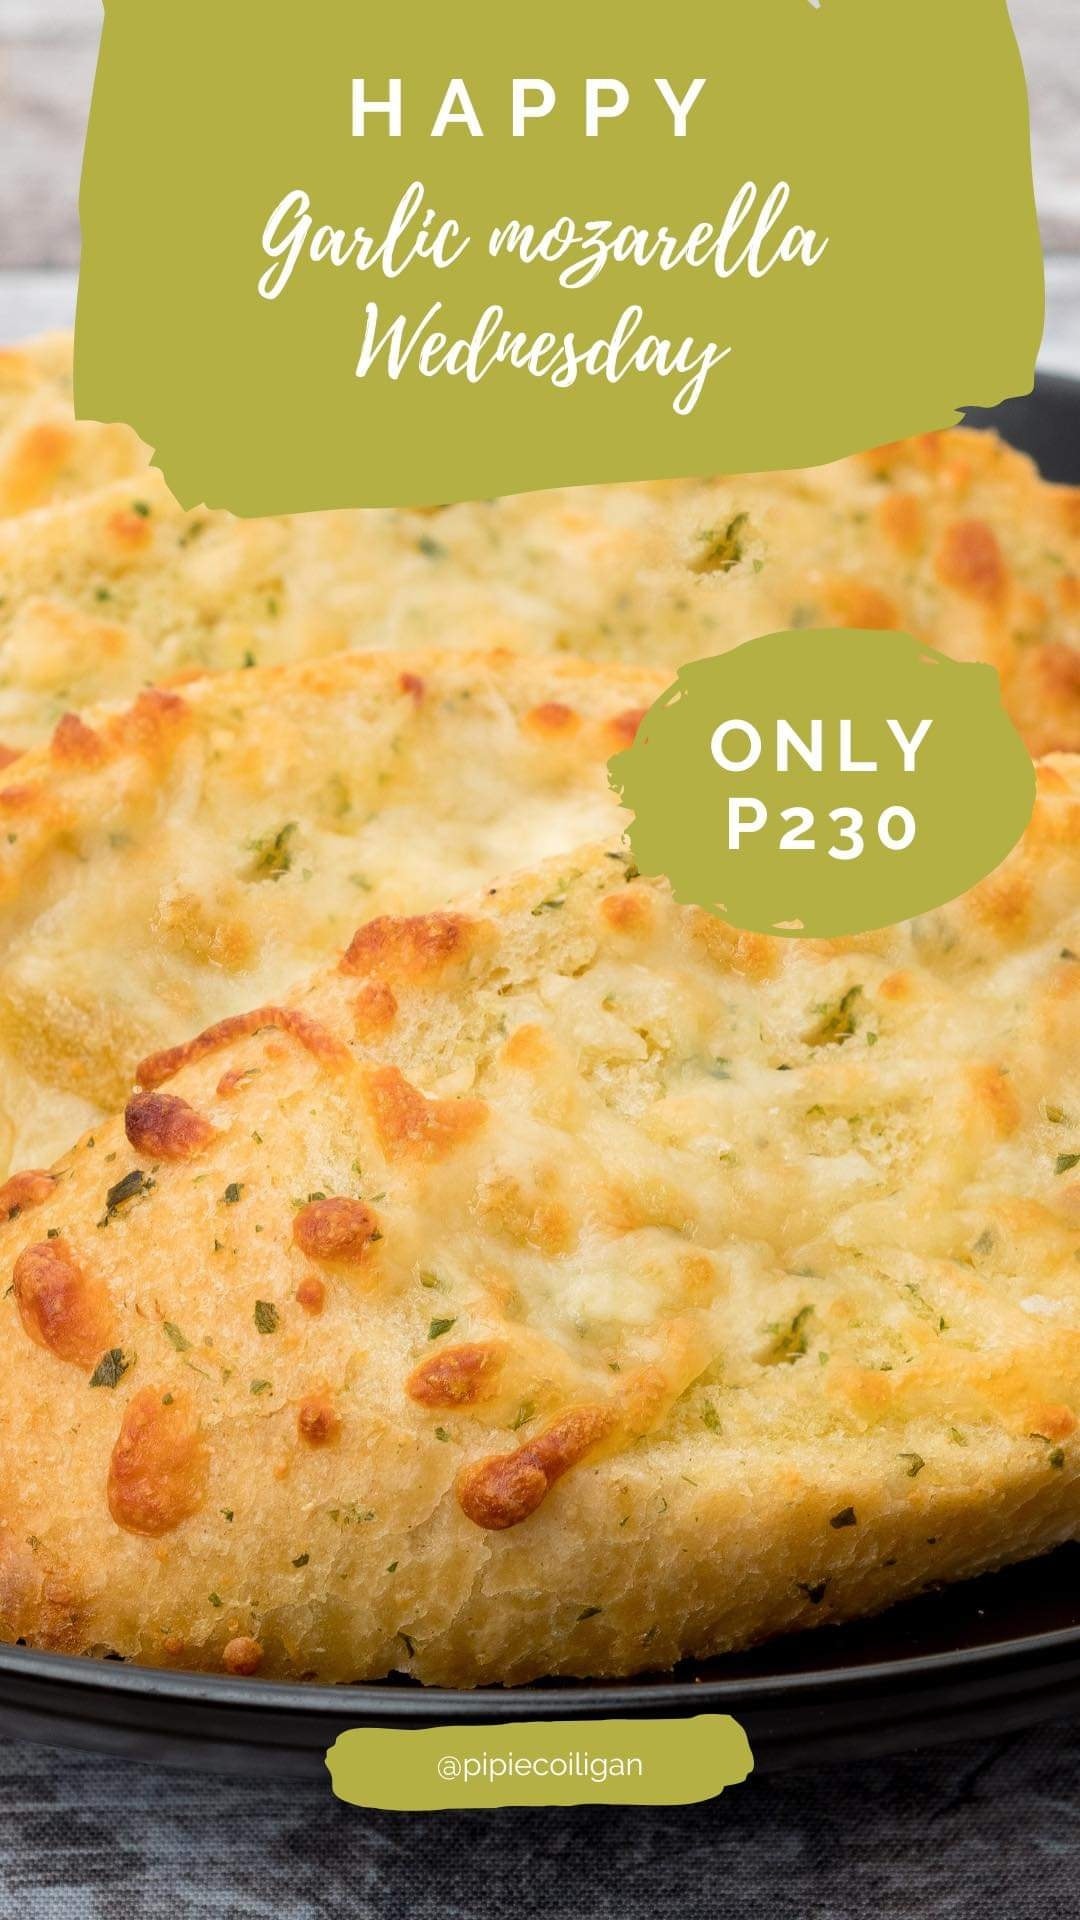 Enjoy the cheesy-garlic taste of our delicious Garlic mozzarella loaf bread